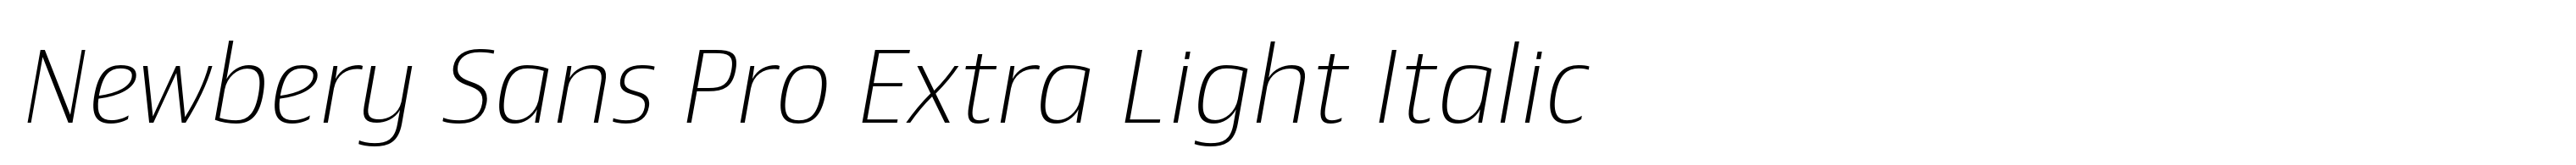 Newbery Sans Pro Extra Light Italic